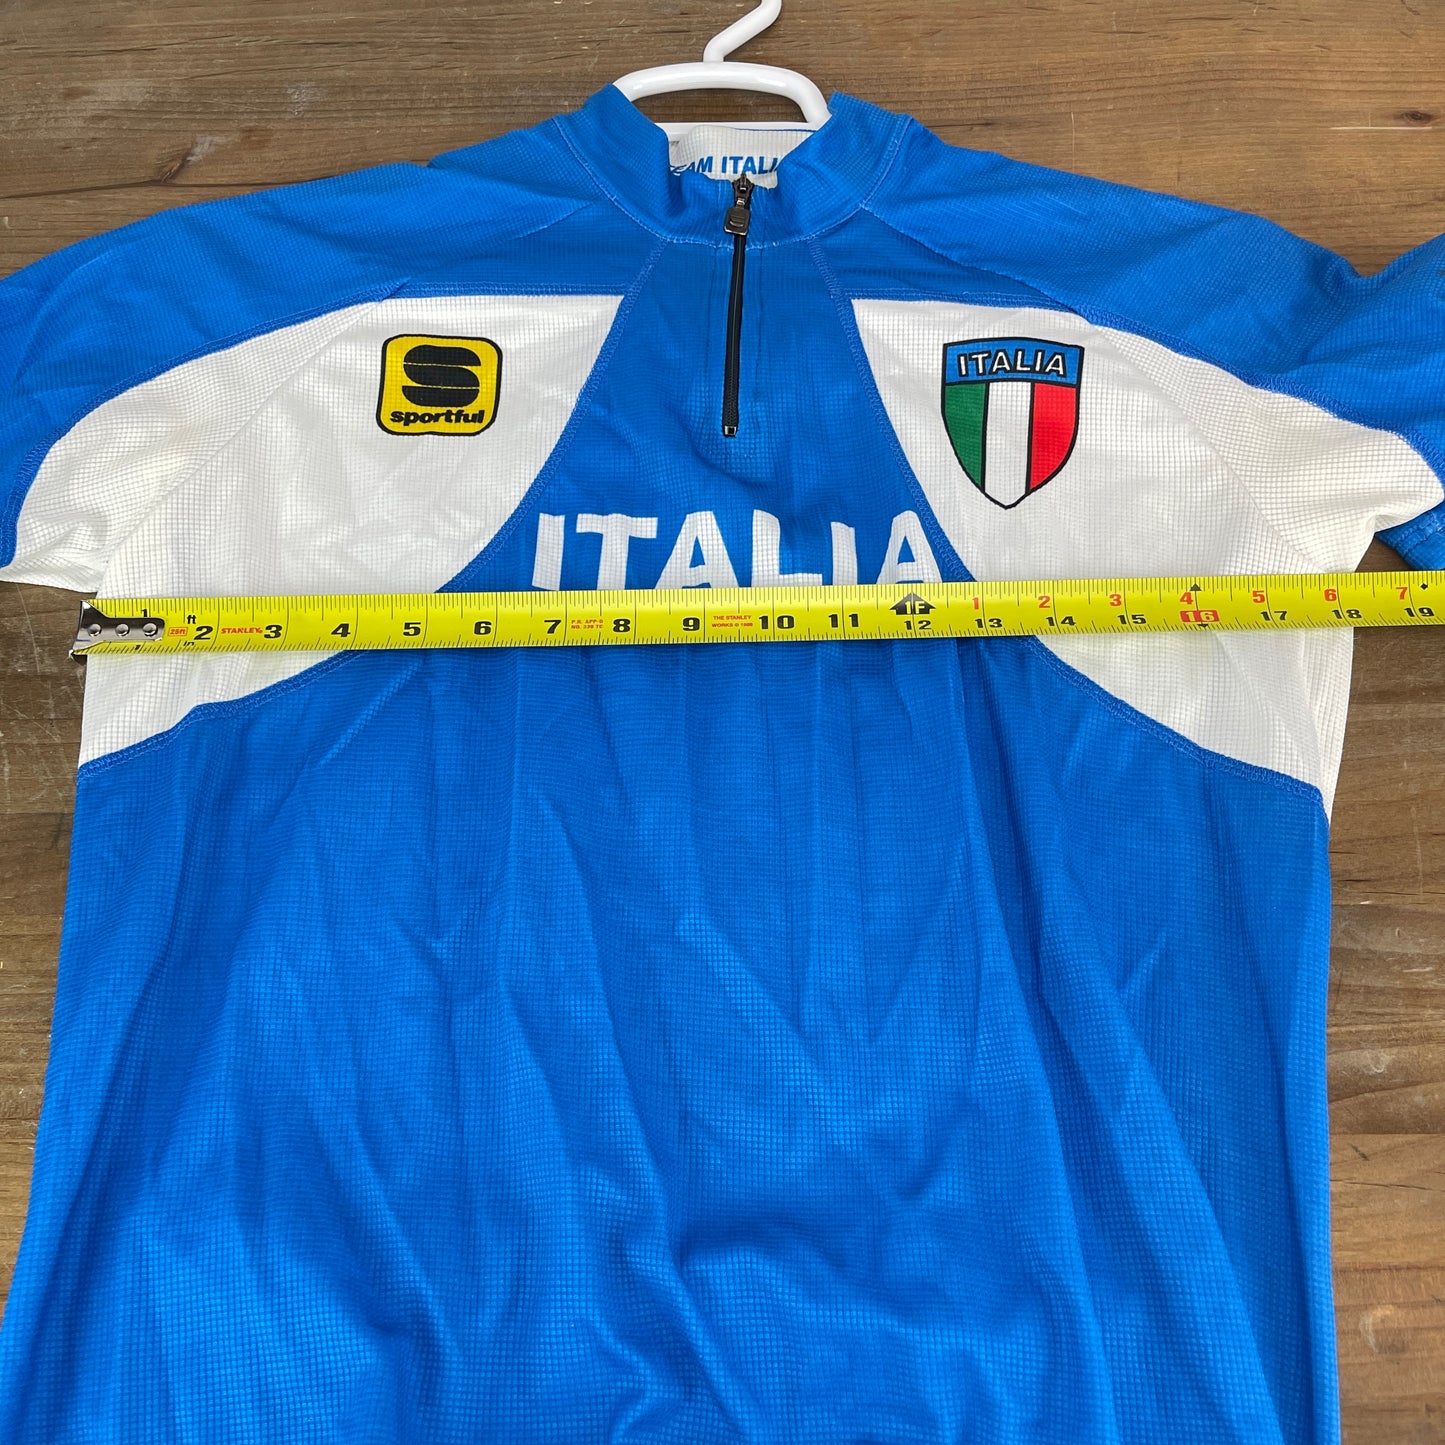 Sportful Team Italia Medium Blue Men's Road Bike Cycling Jersey Short Sleeve